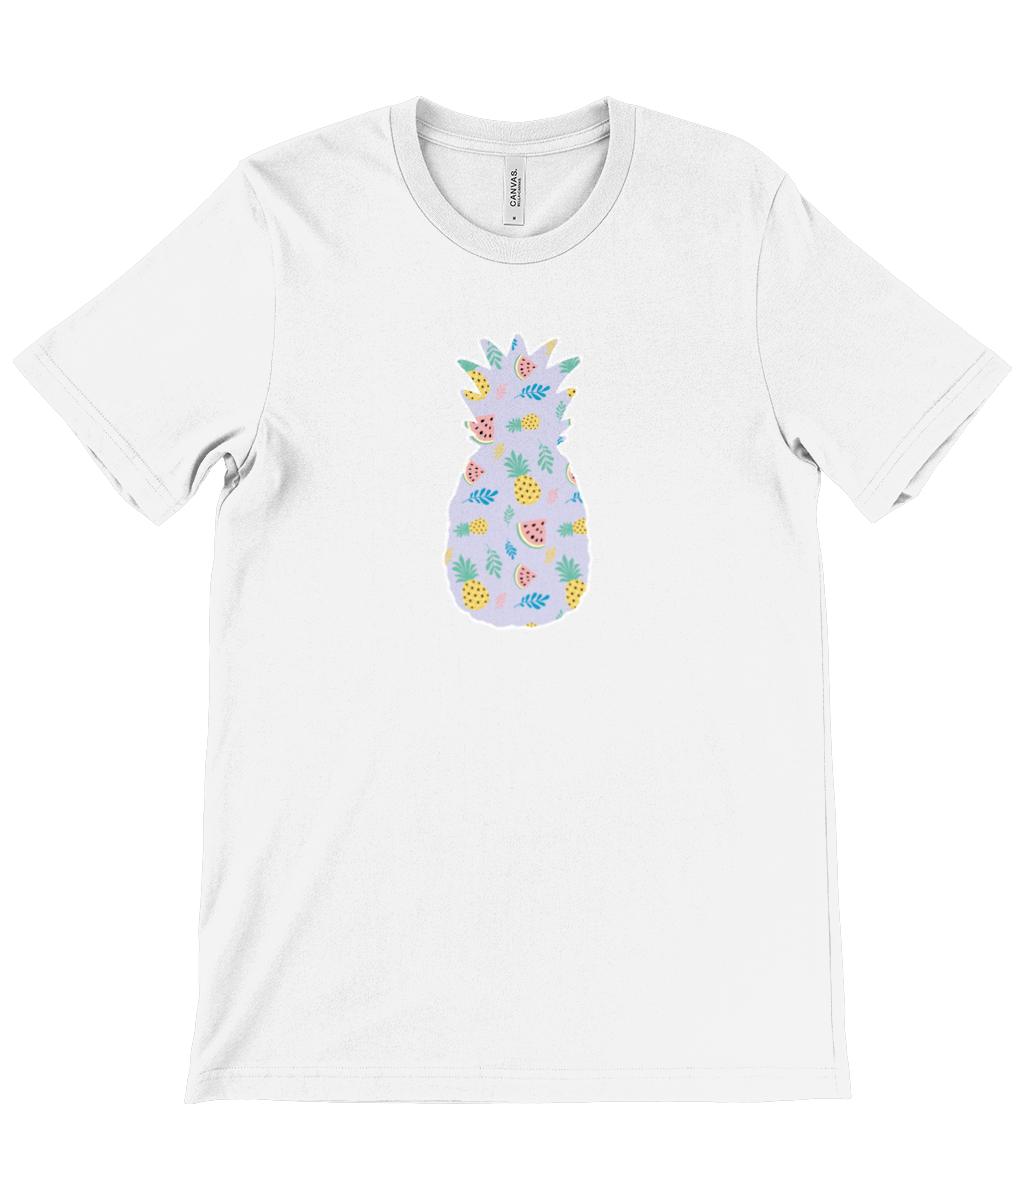 cutie fruity crew neck t-shirt